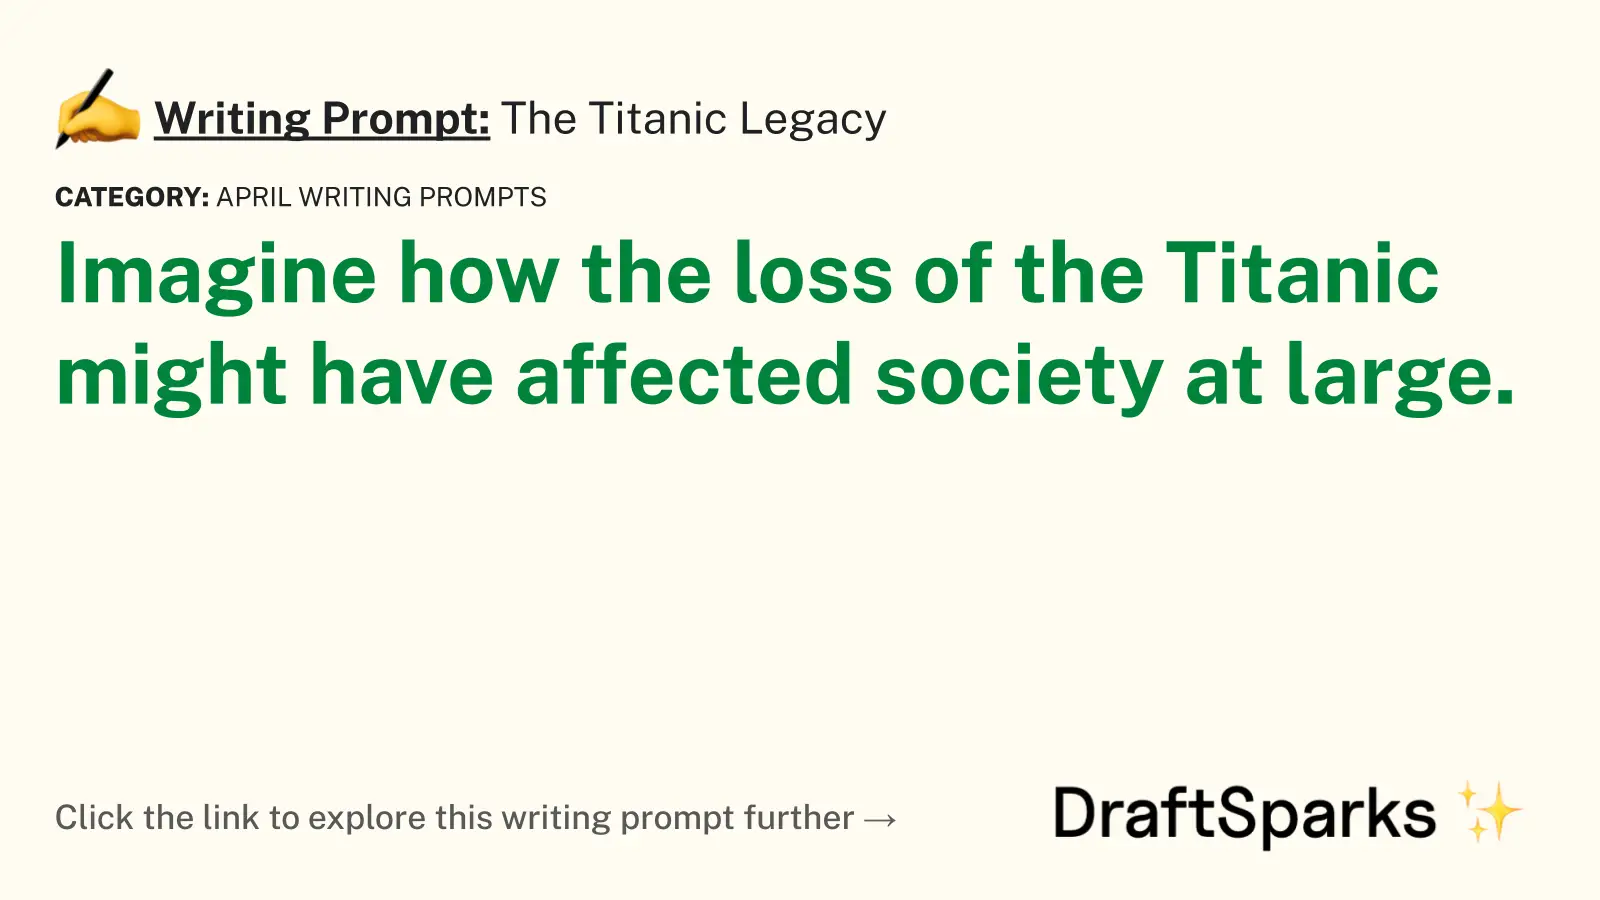 The Titanic Legacy